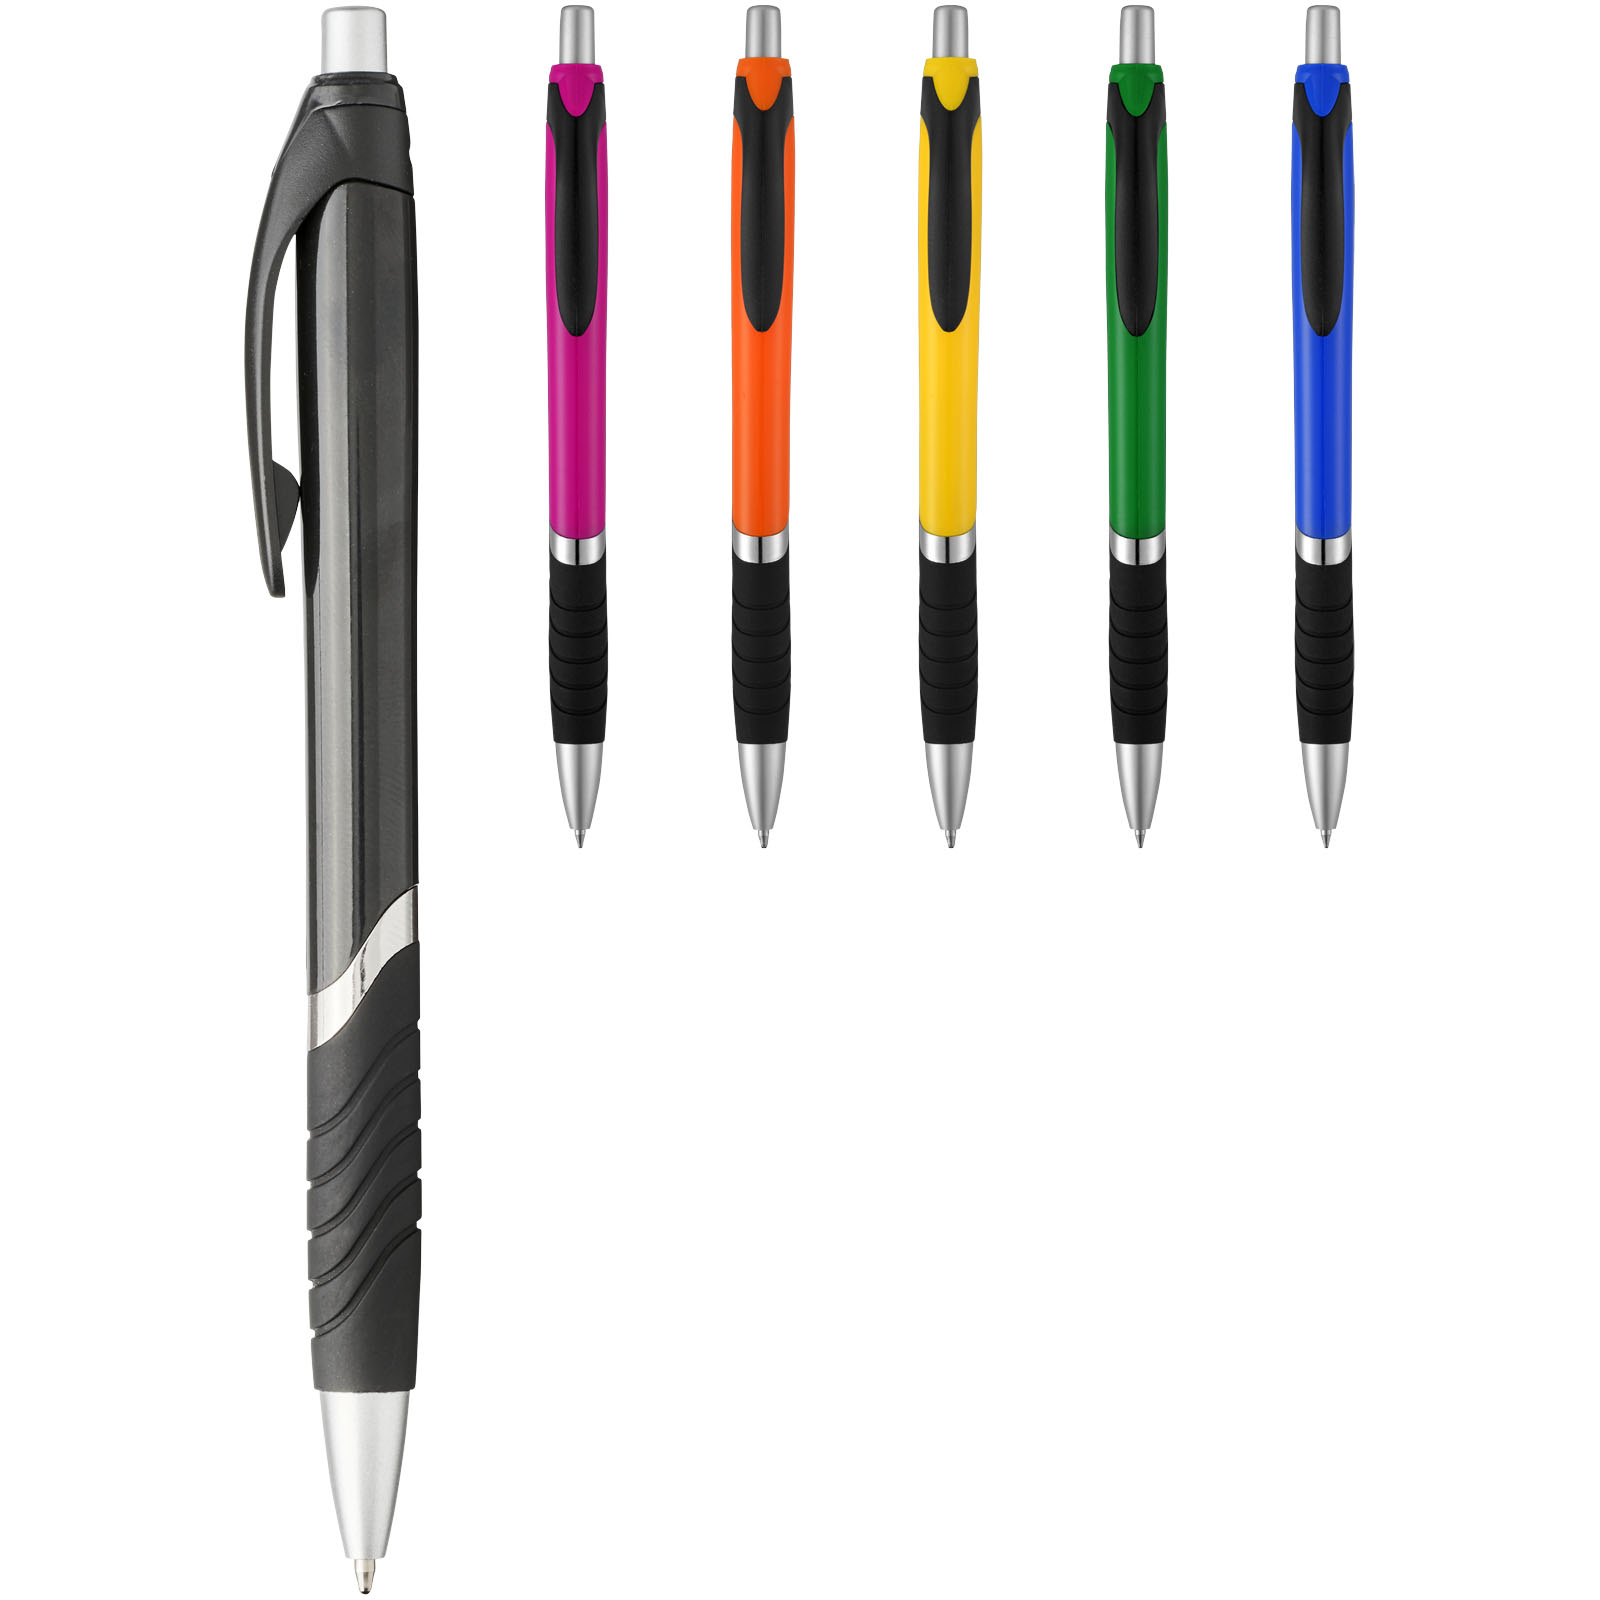 Advertising Ballpoint Pens - Turbo ballpoint pen with rubber grip